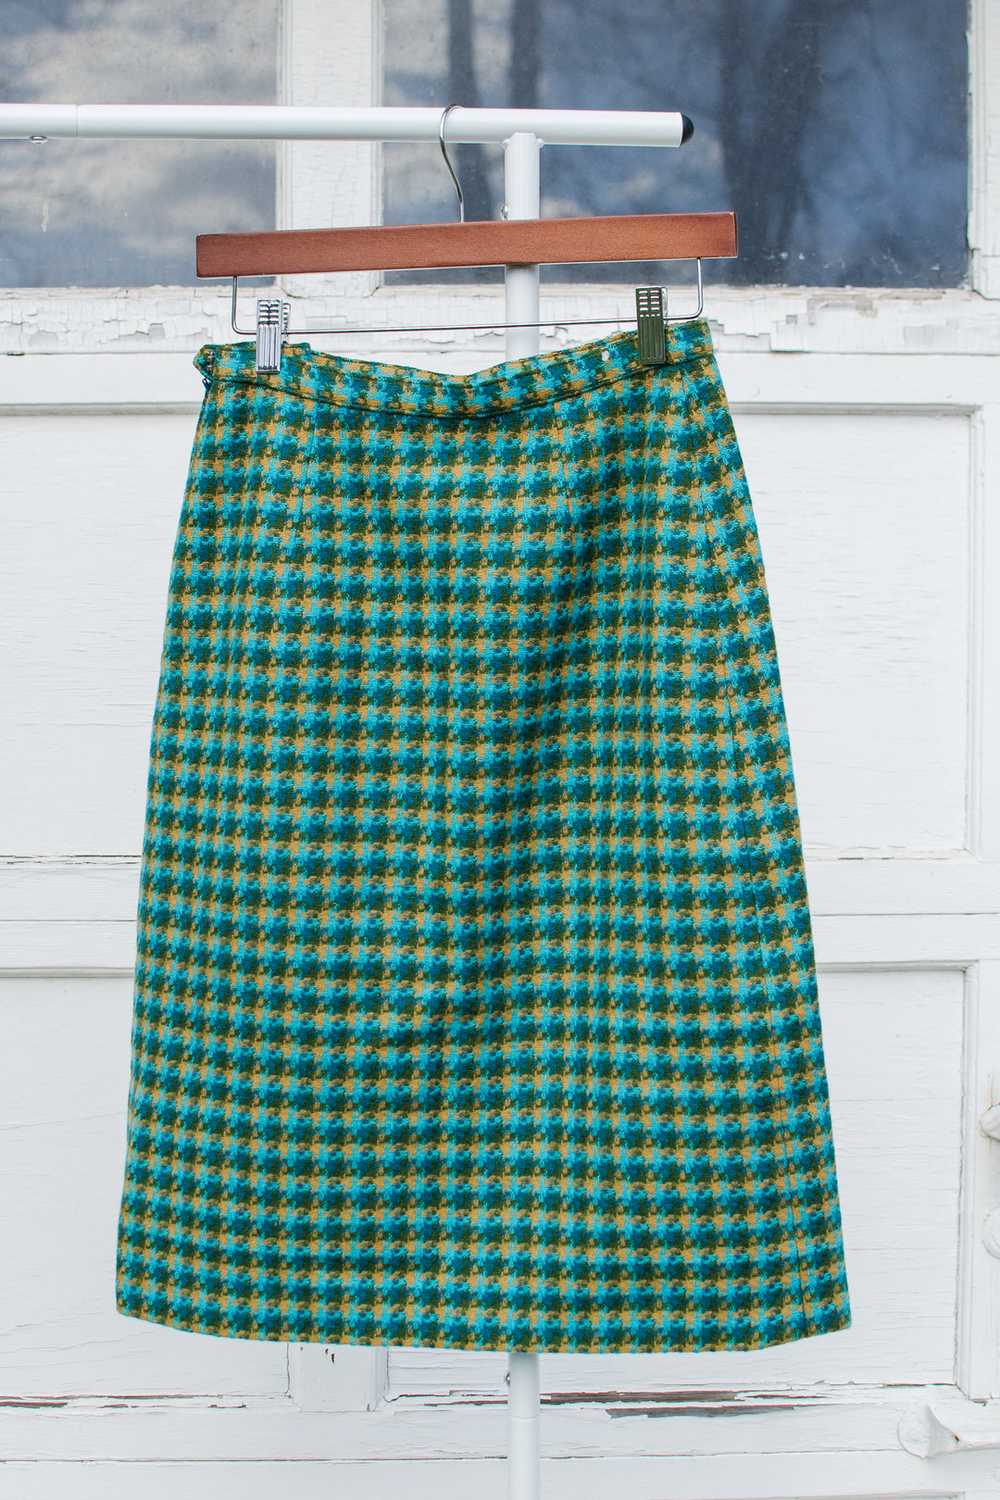 Vintage Teal Herringbone Pencil Skirt / Small - image 5